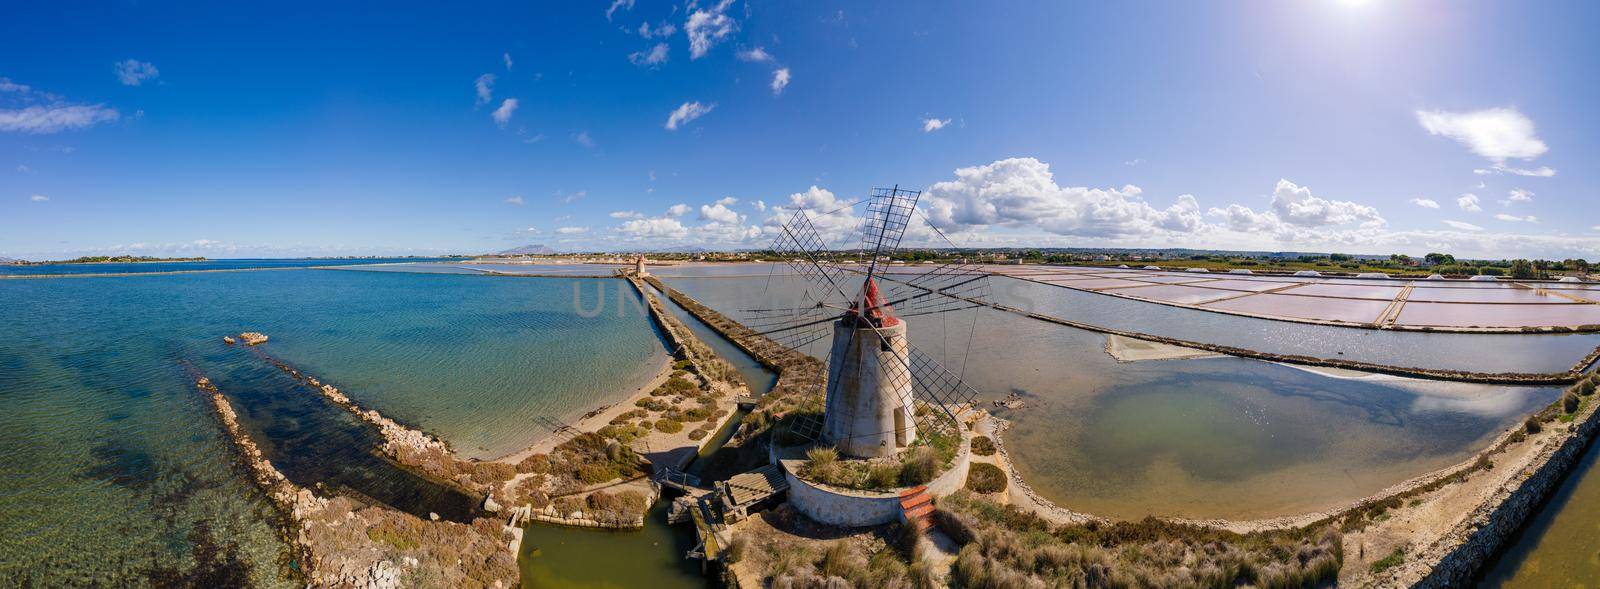 Salt Pans near Marsala, Sicily, Italy, Saline of the Laguna Marsala with windmill by fokkebok